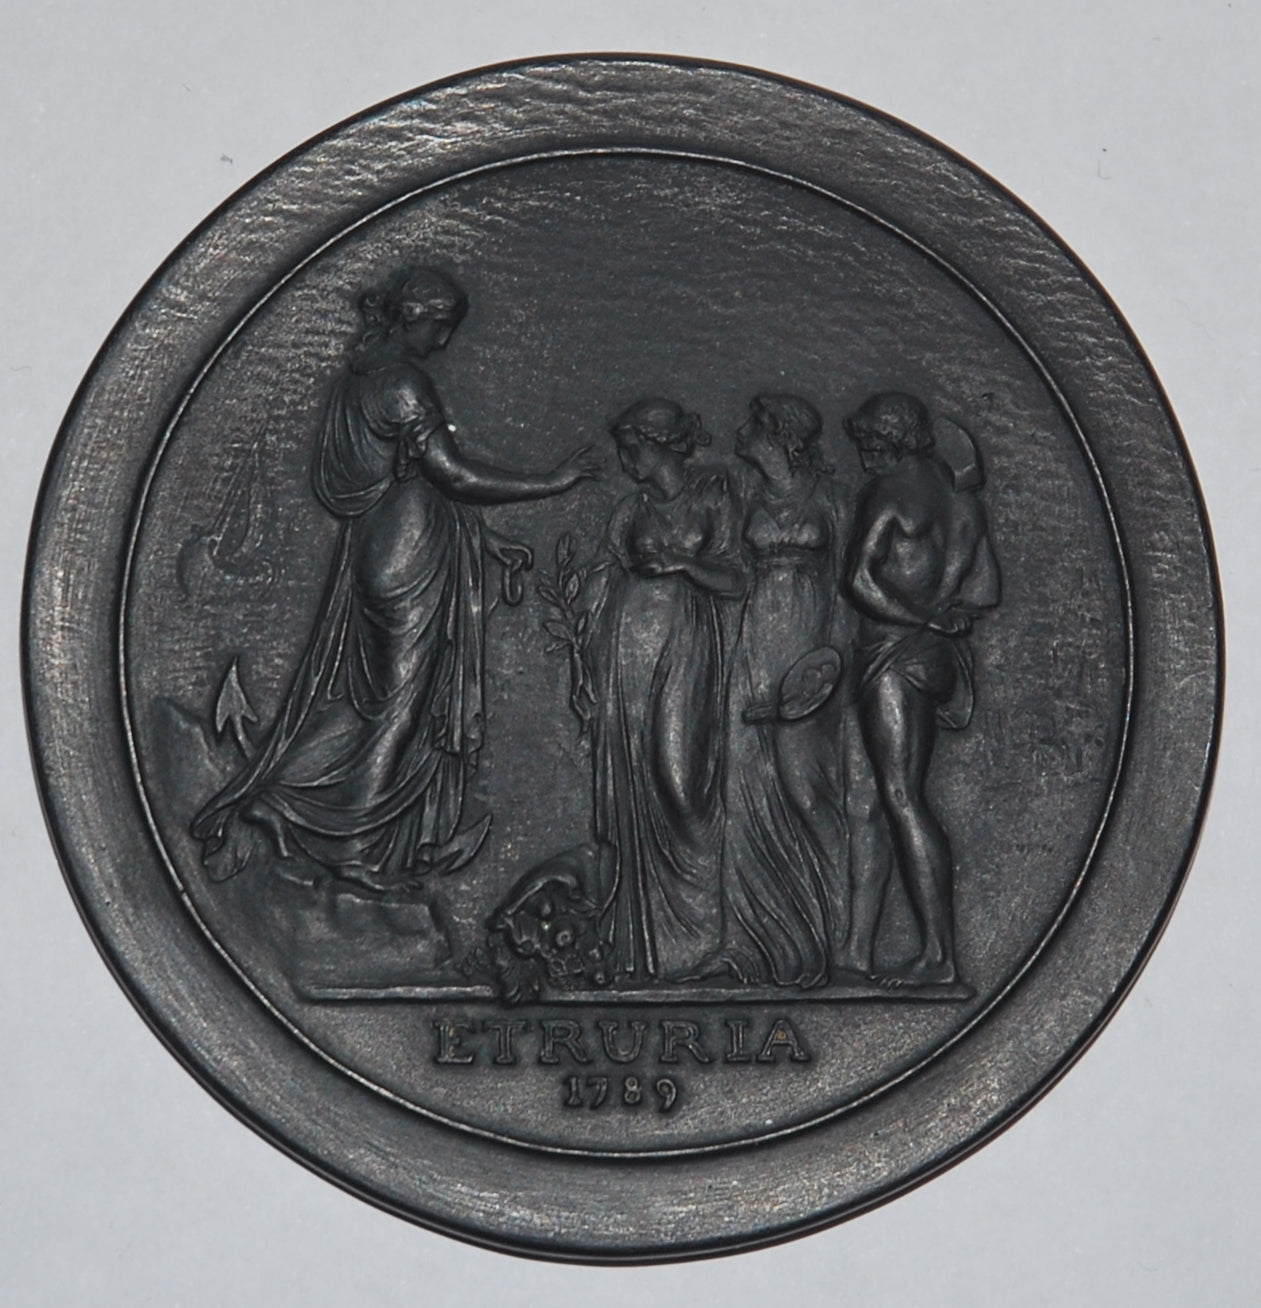 Sydney Cove Medallion